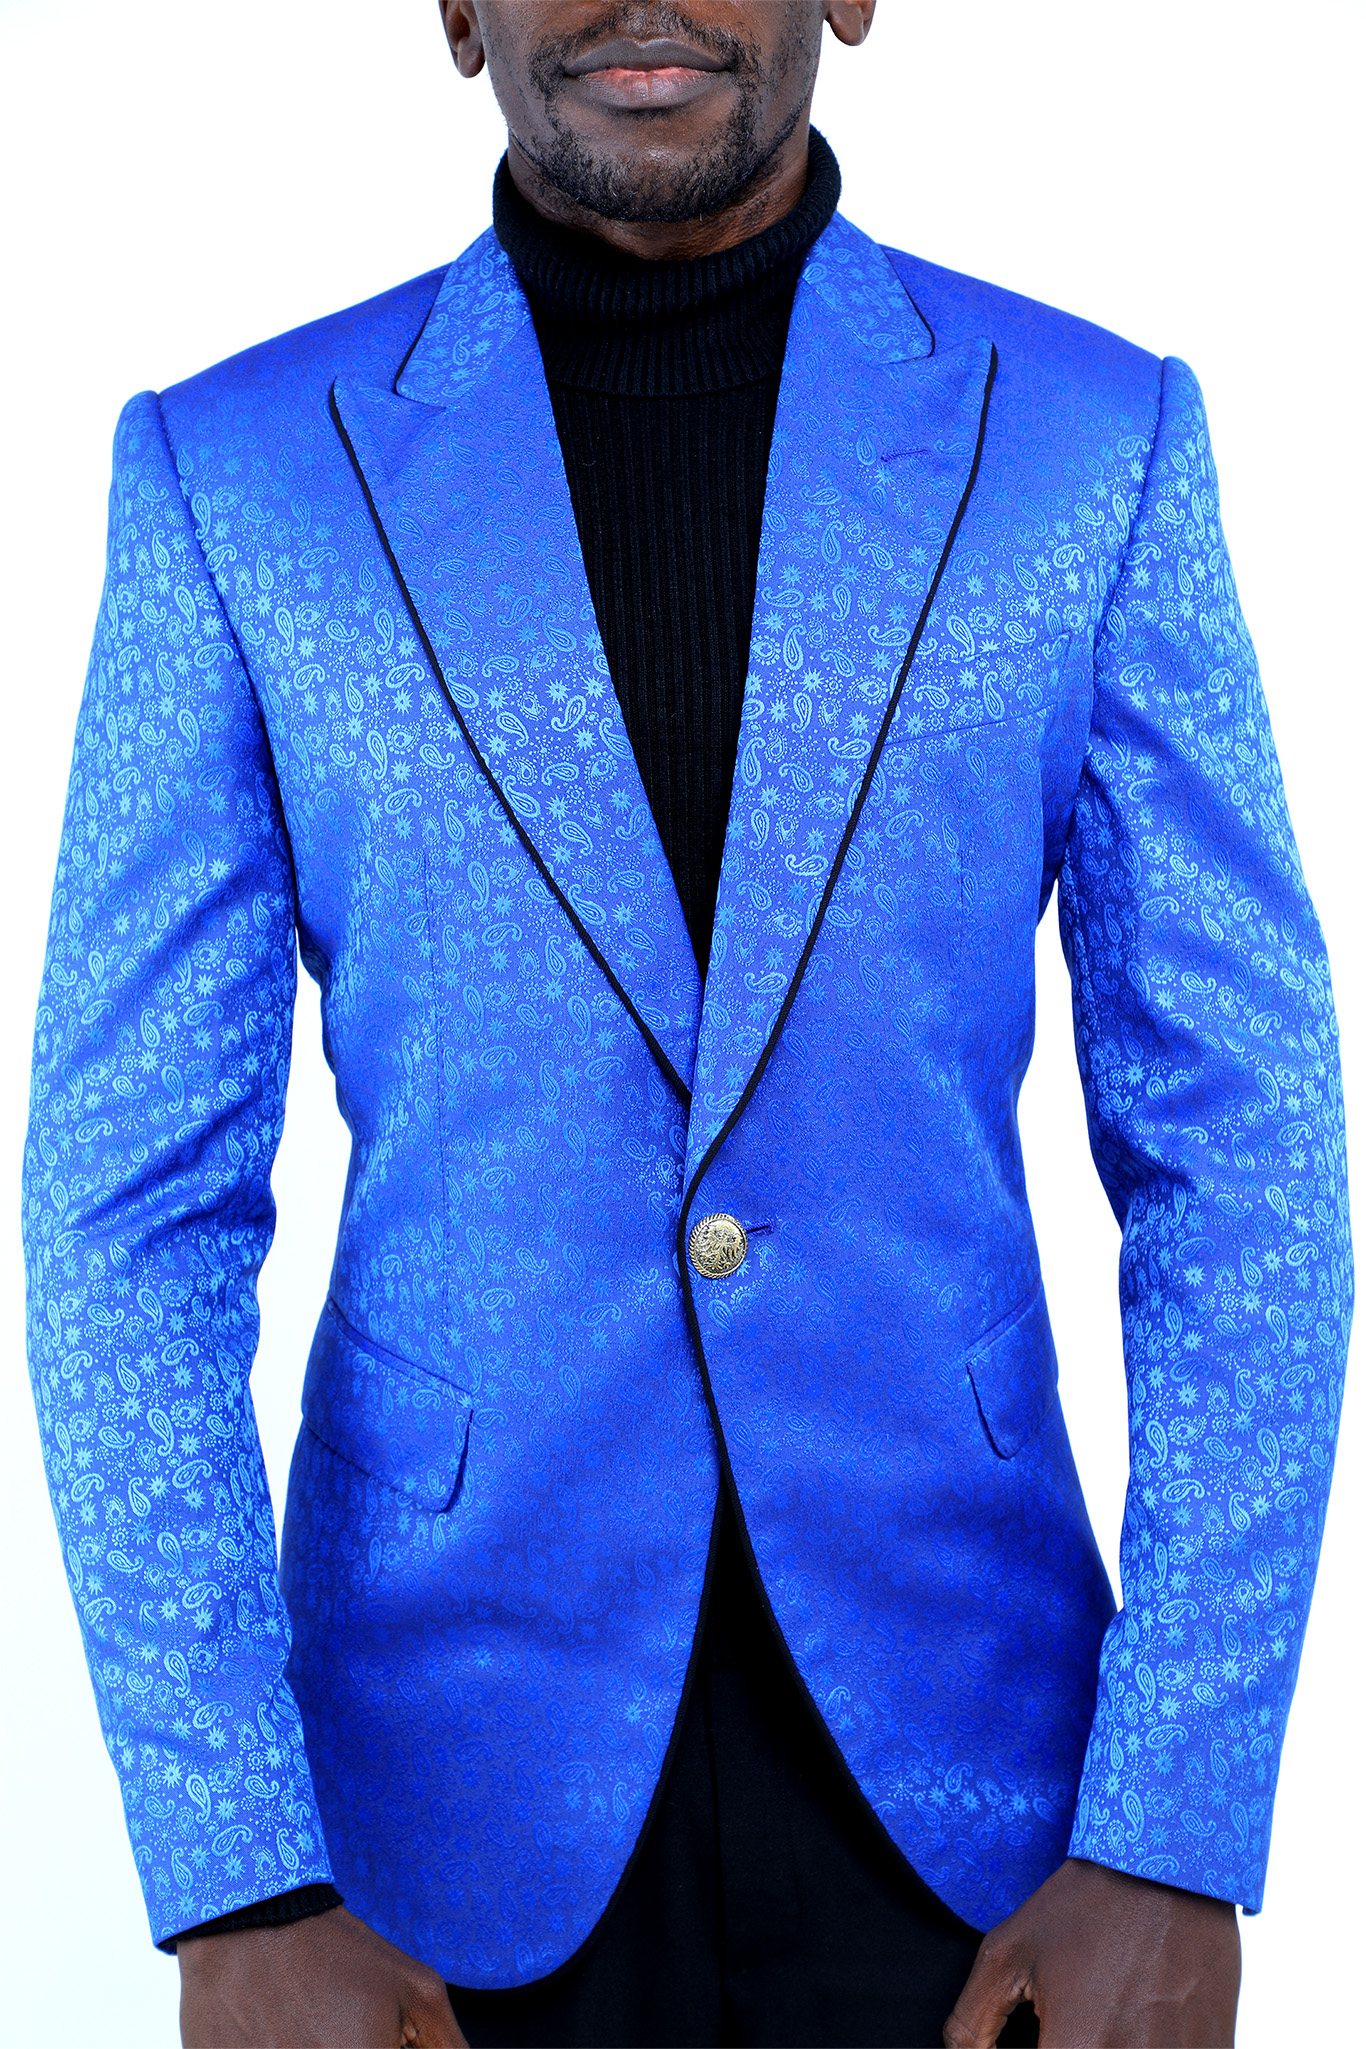 Blue paisley men's jacket Nairobi Kenya